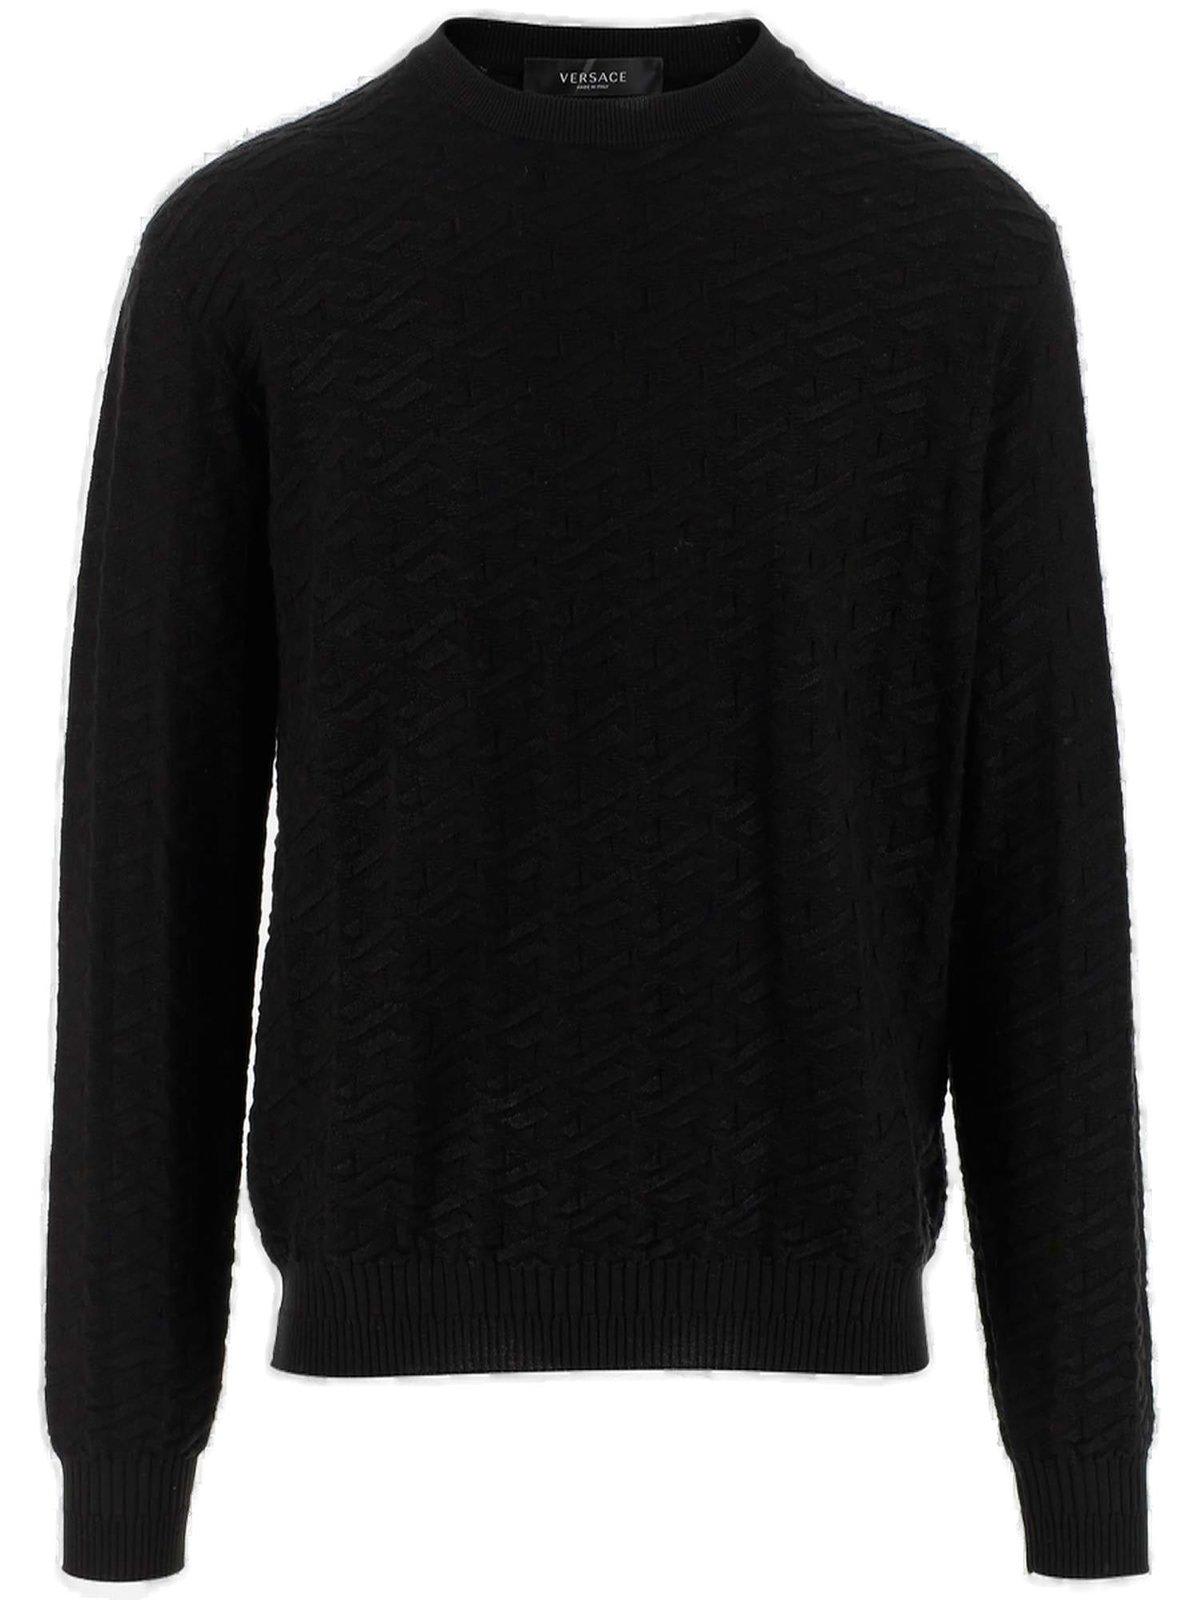 Versace Ribbed-knit Crewneck Sweater